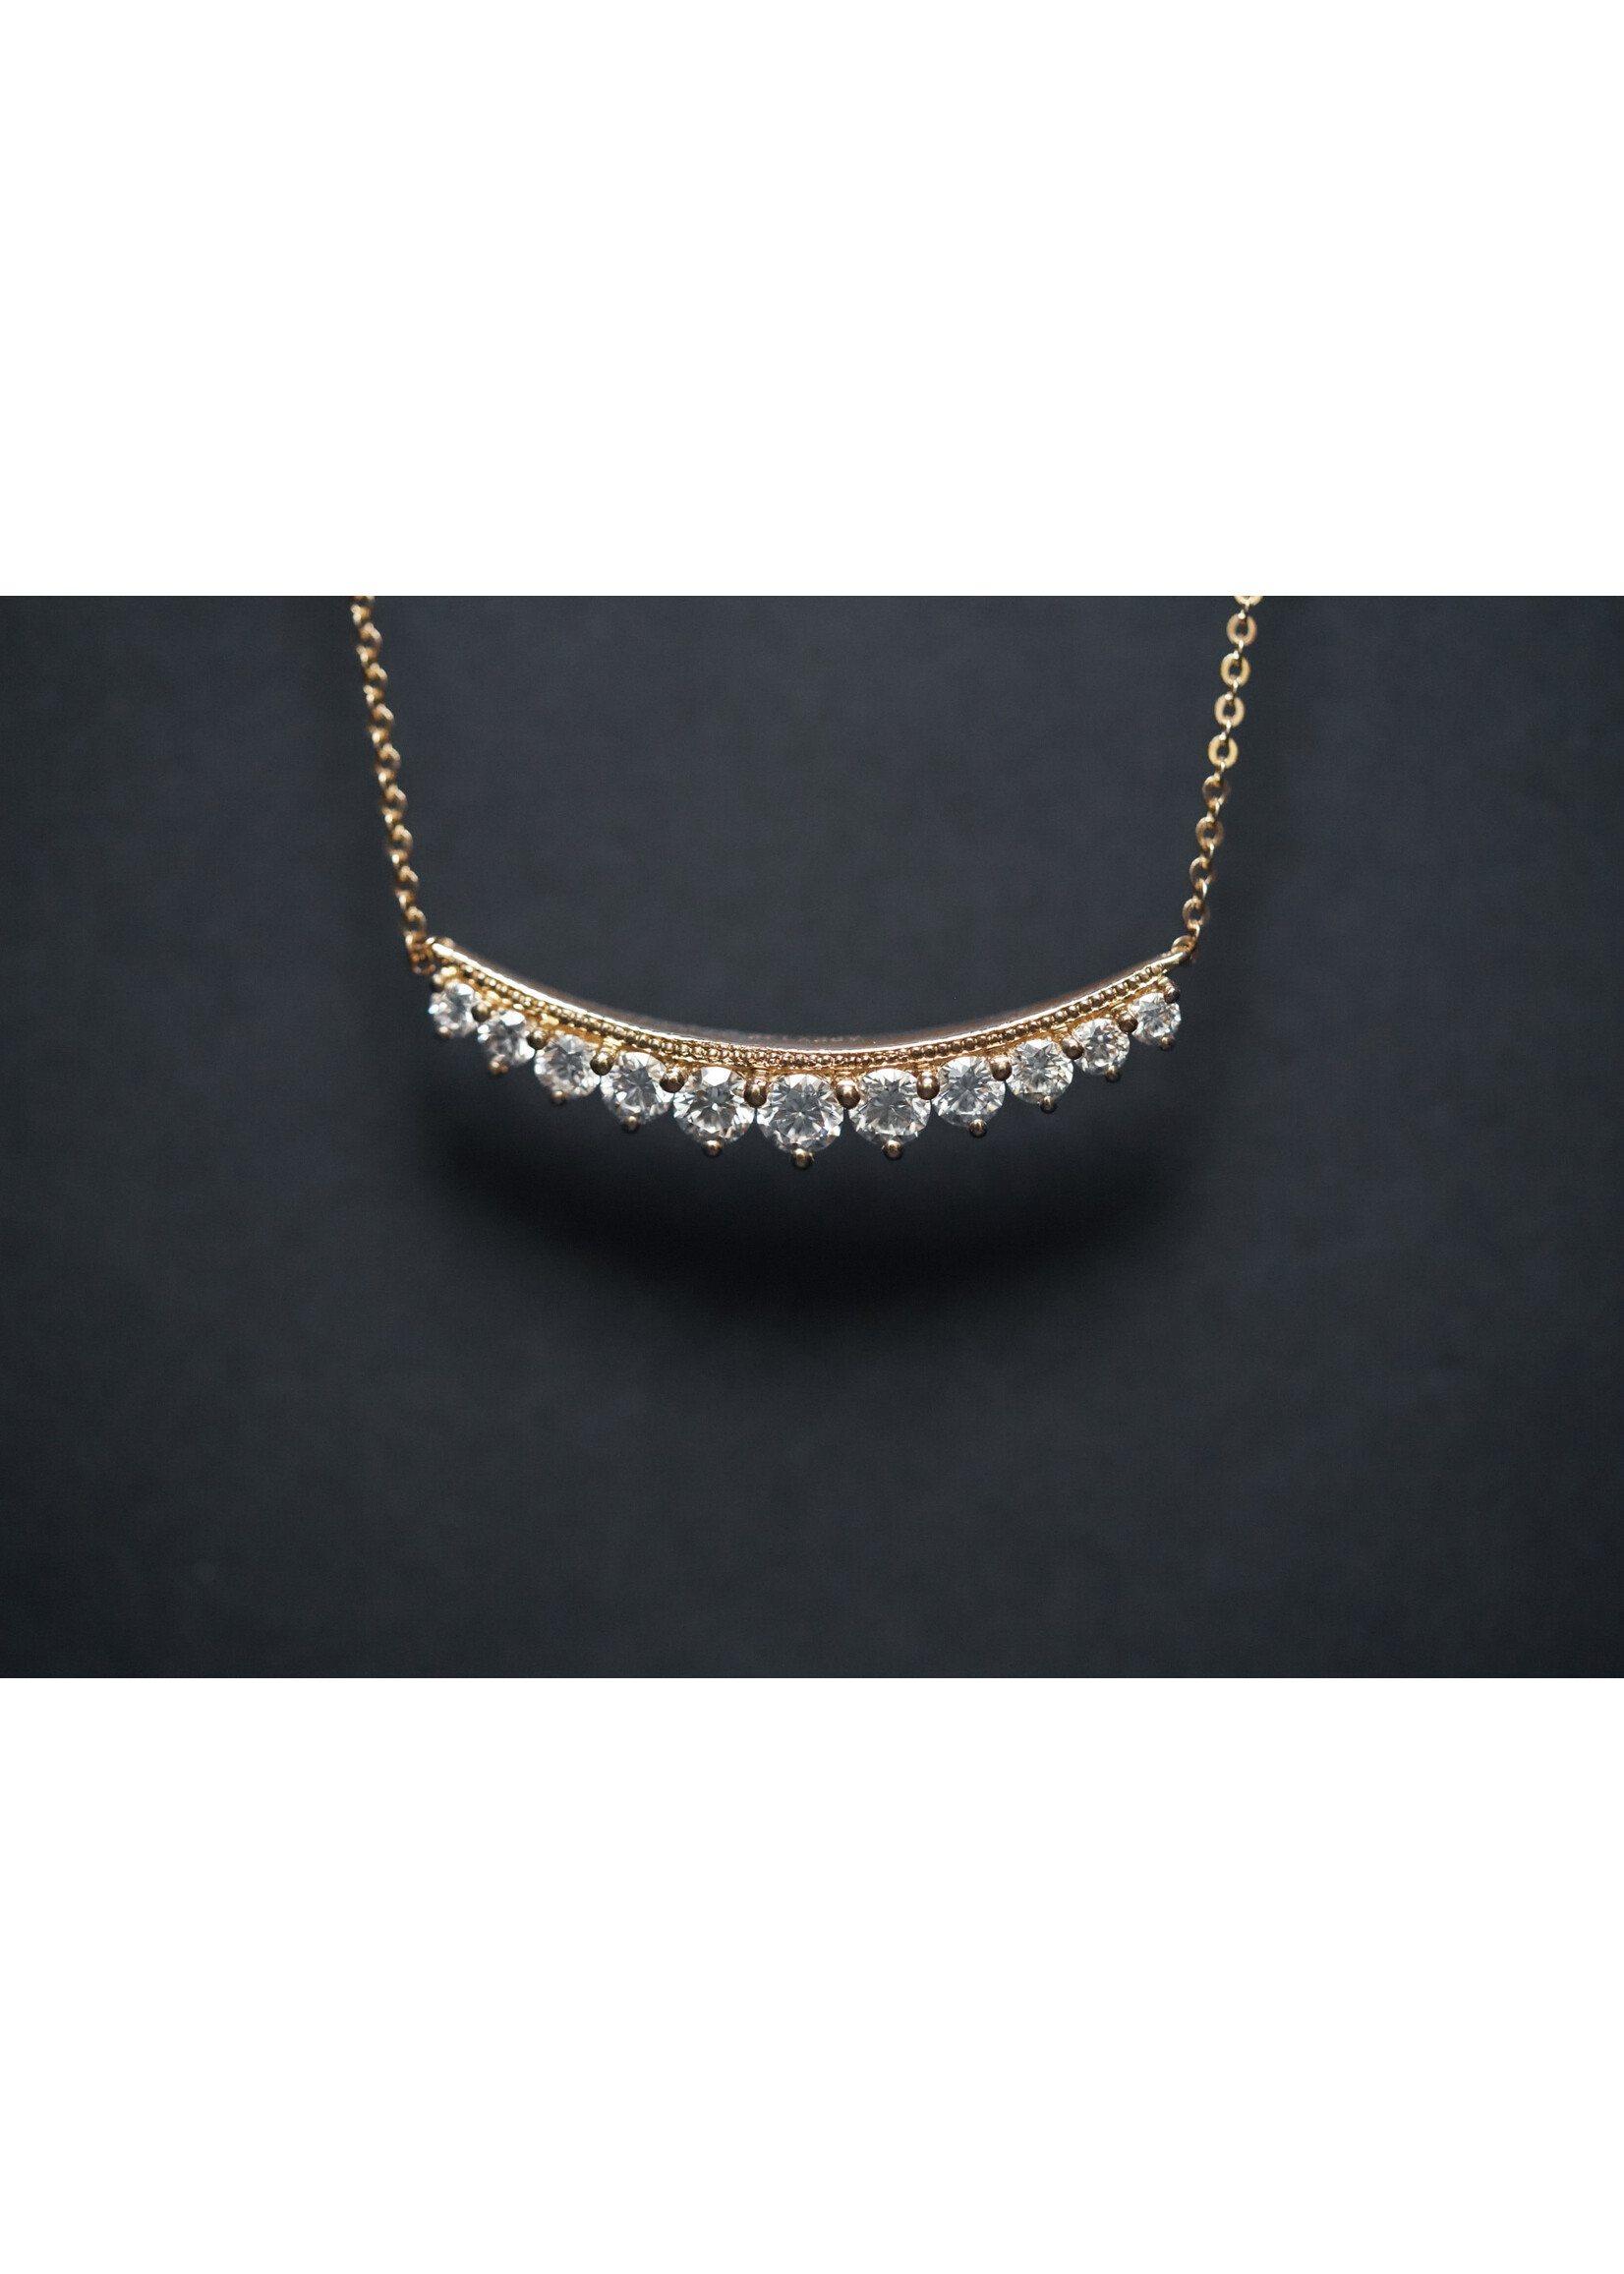 14KY 3.4g .83ctw Curved Diamond Bar Necklace 18"